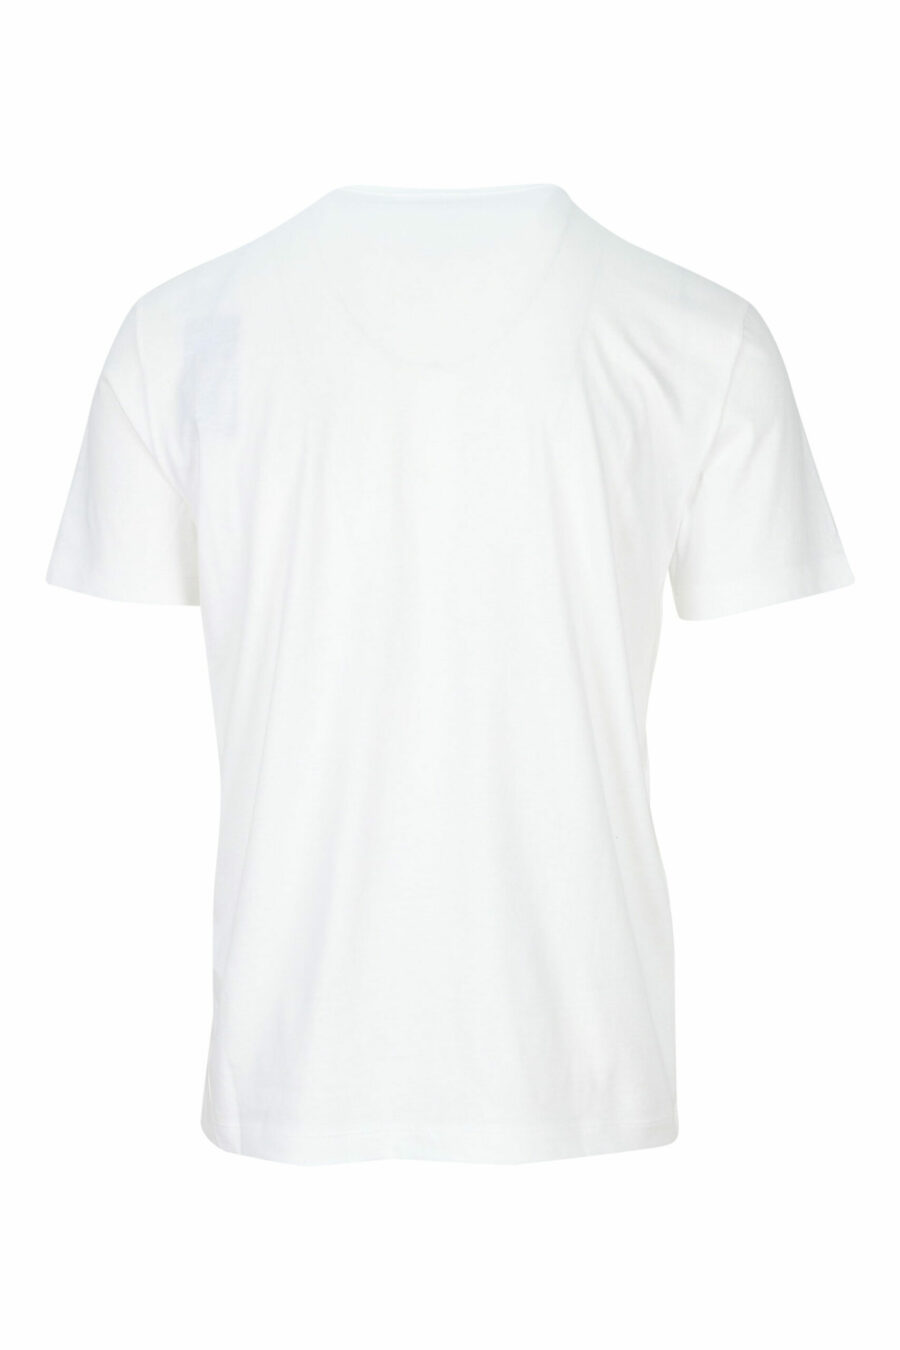 T-shirt blanc avec maxilogo noir "lux identity" - 8057767688486 1 scaled